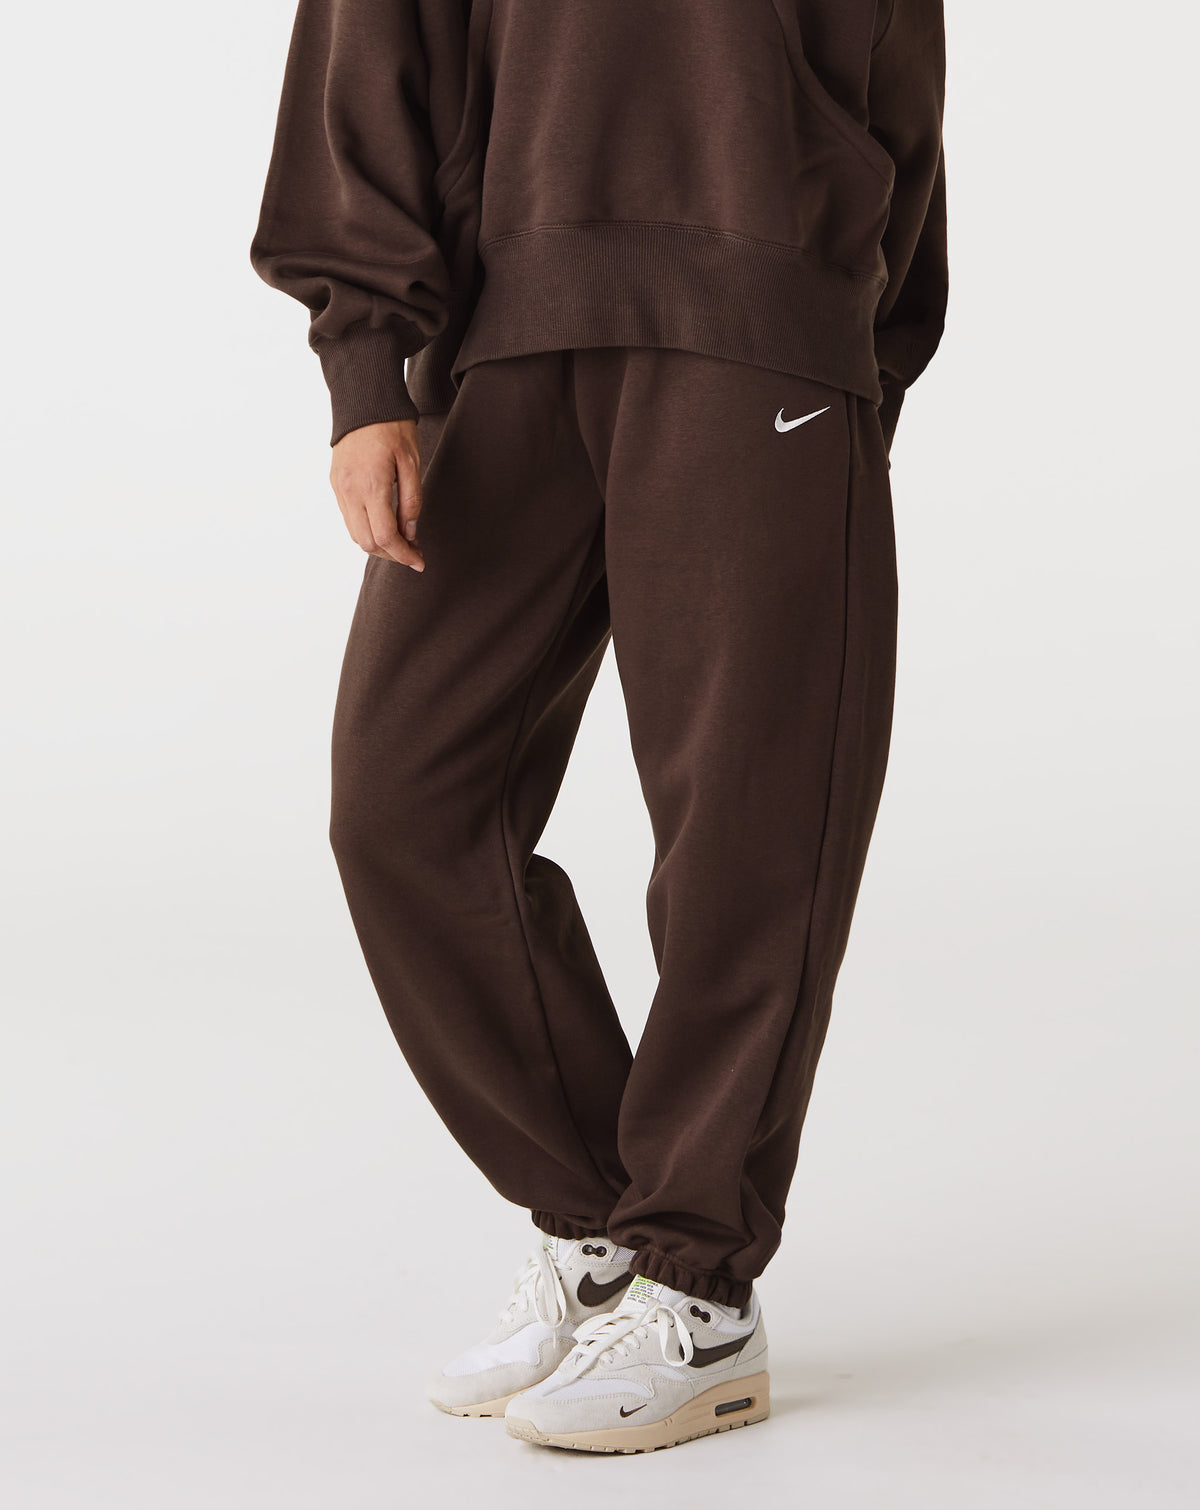 Nike Women's Phoenix Fleece High-Waisted Oversized Sweatpants - Rule of Next Apparel